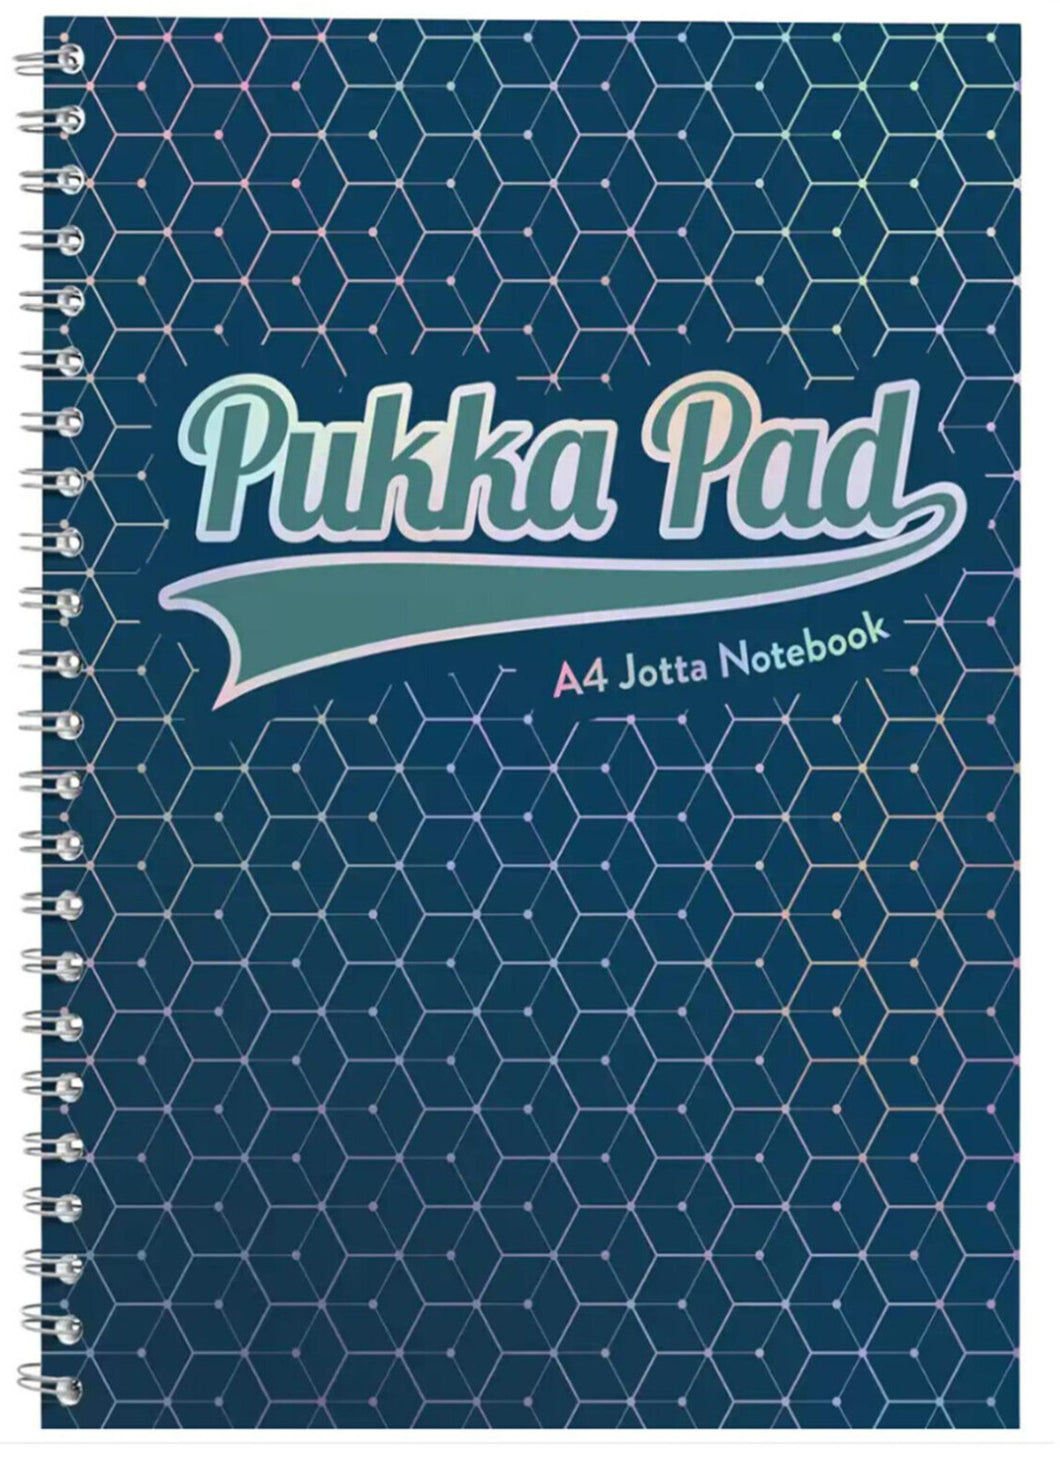 A4 PUKKA PAD Notebook